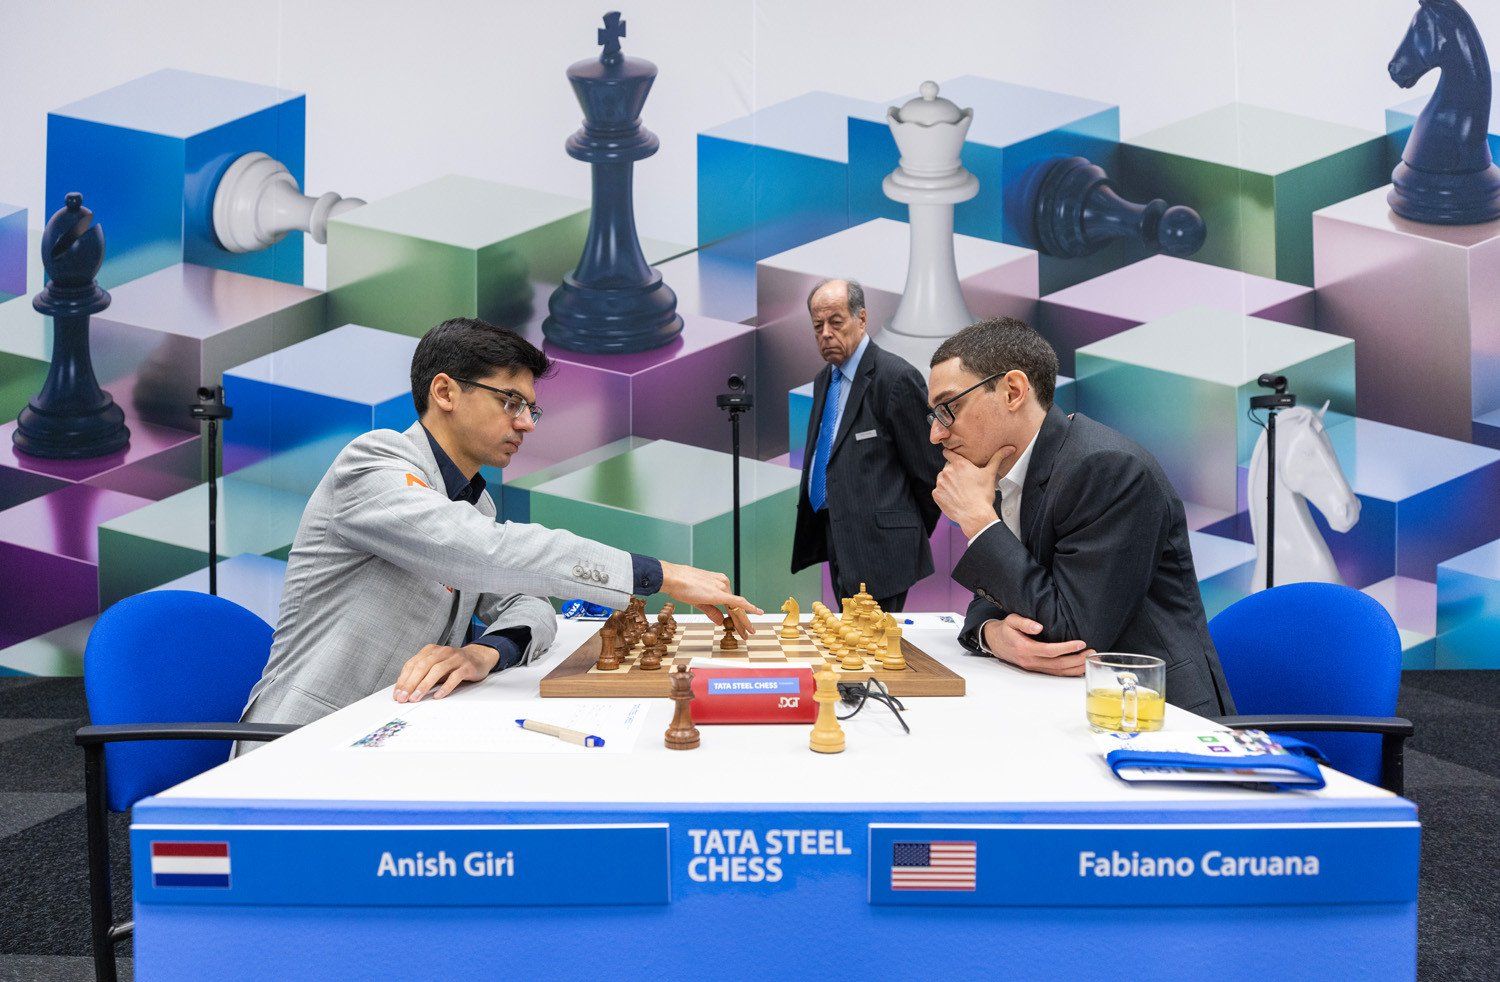 Tata Steel Chess on X: ♟, BREAKING